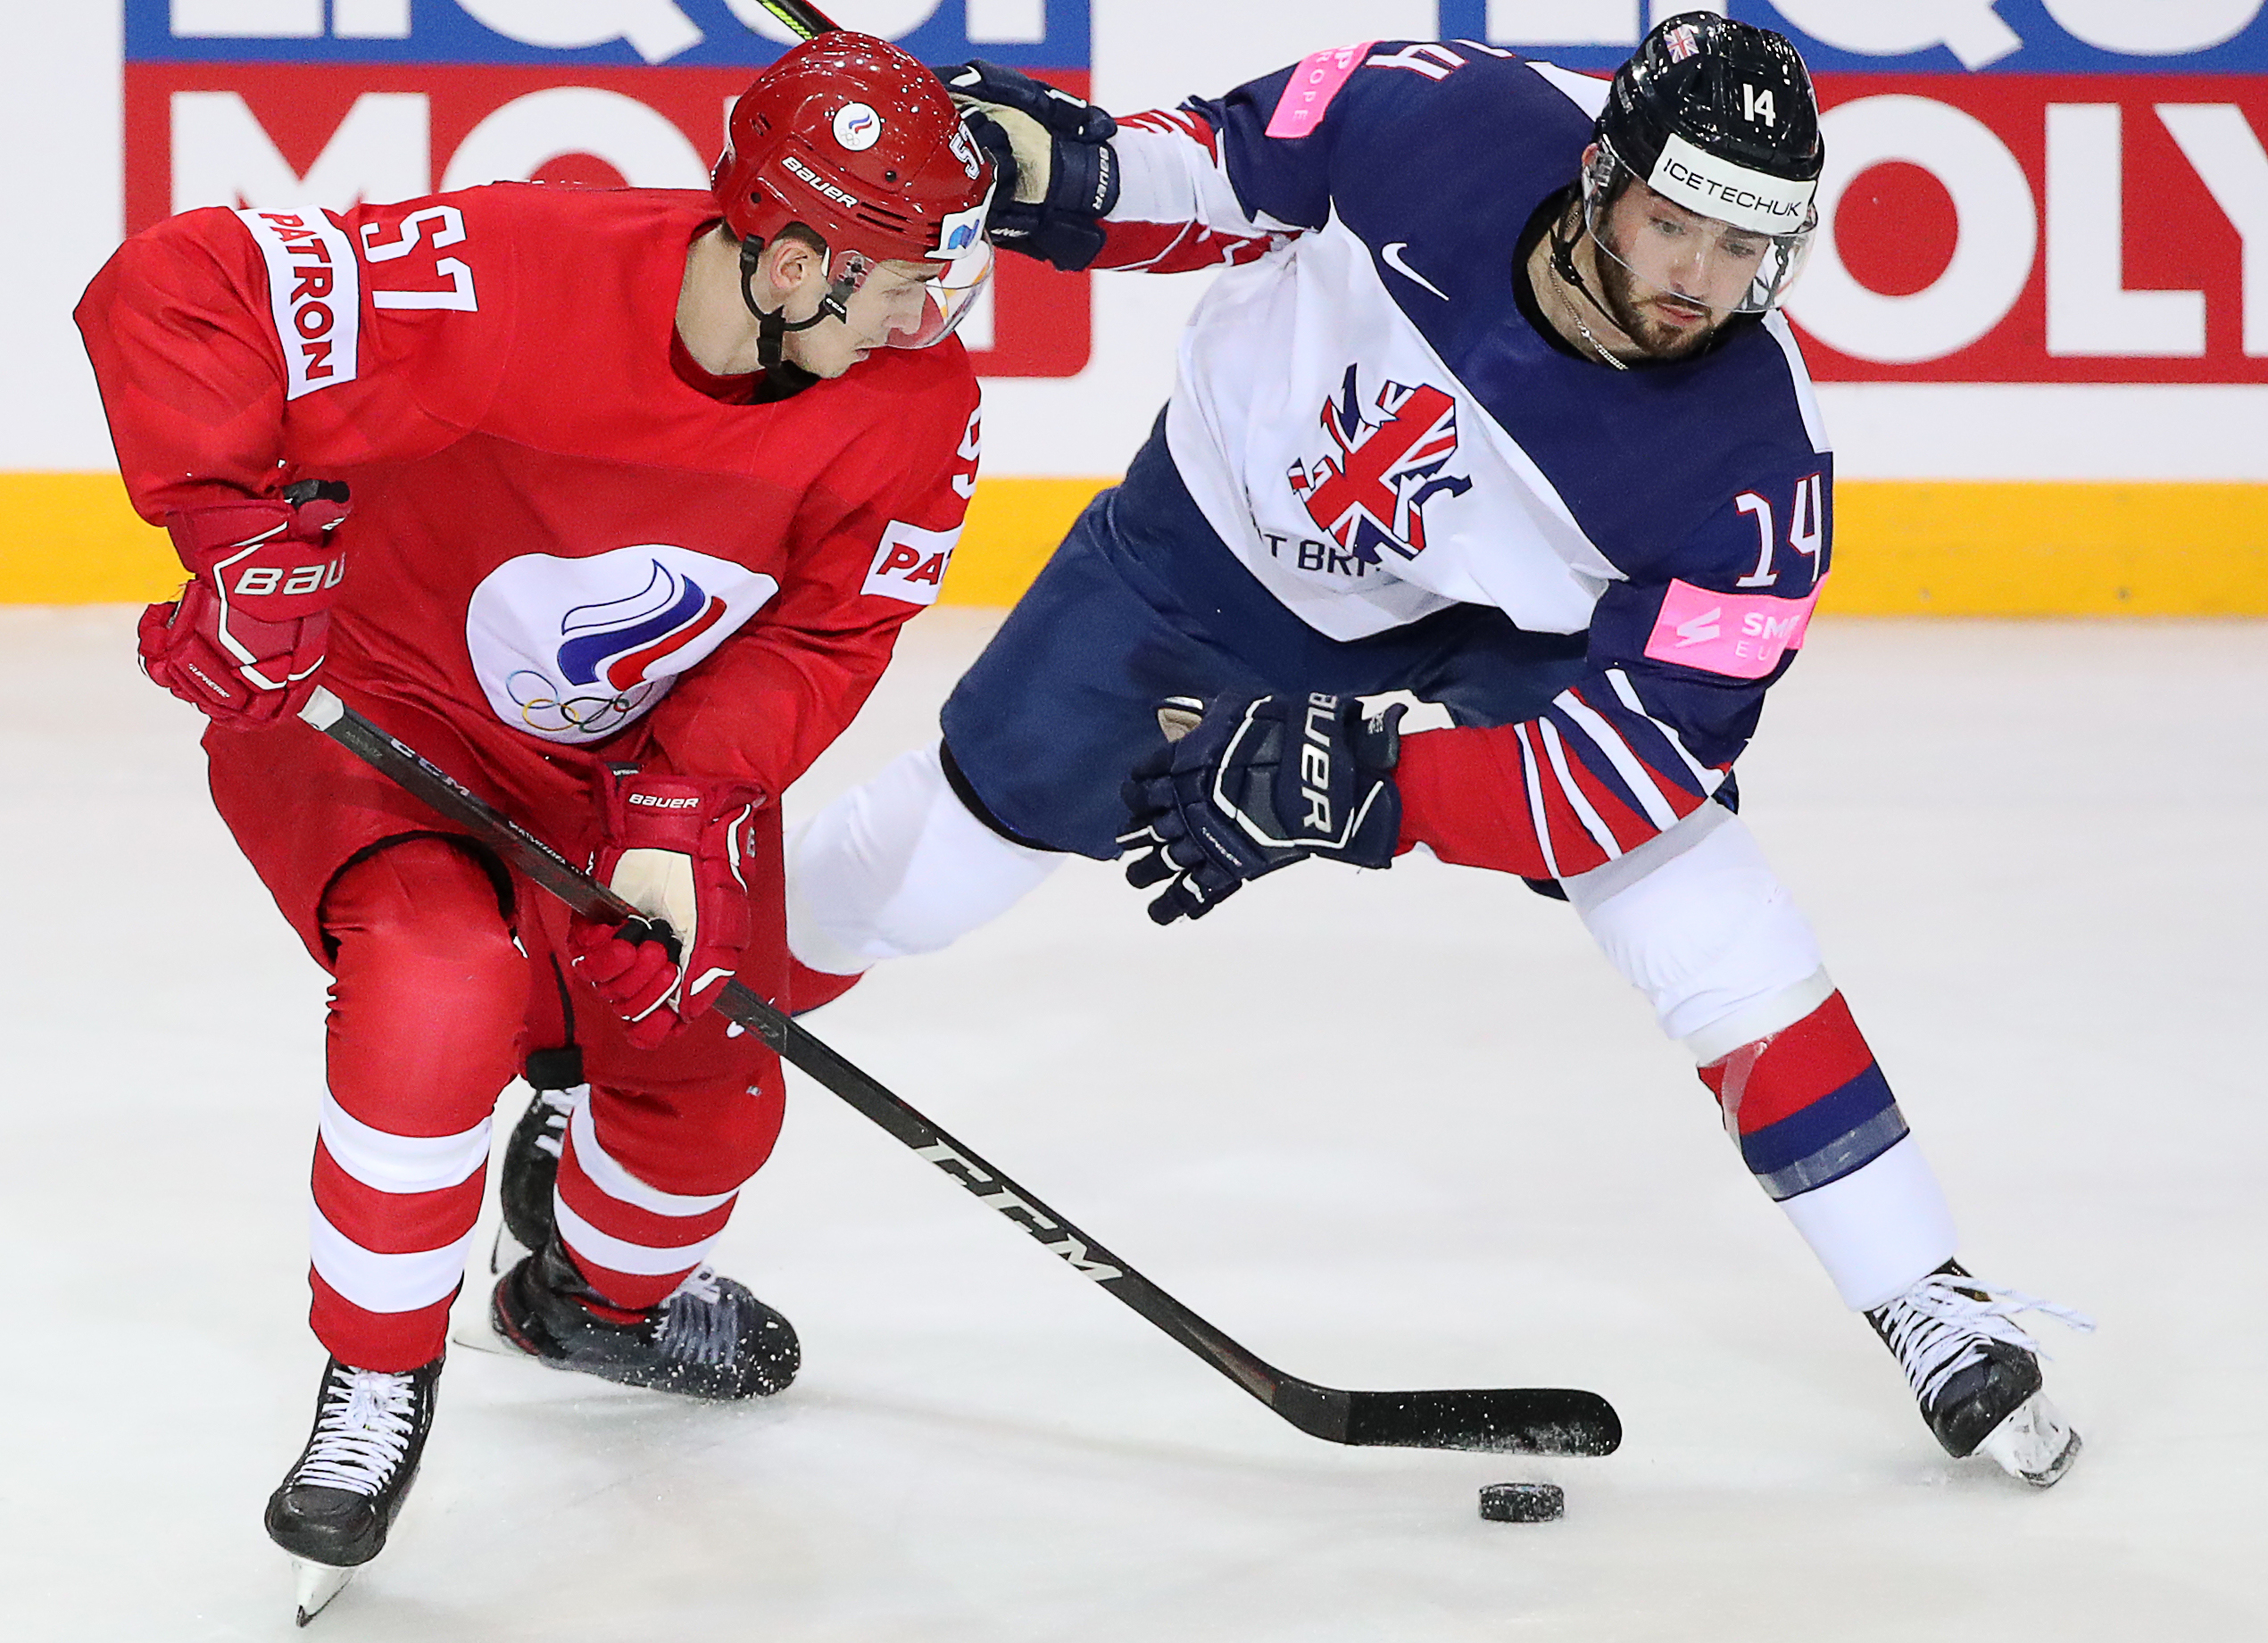 2021 IIHF World Championship, Group A: Great Britain vs Russia